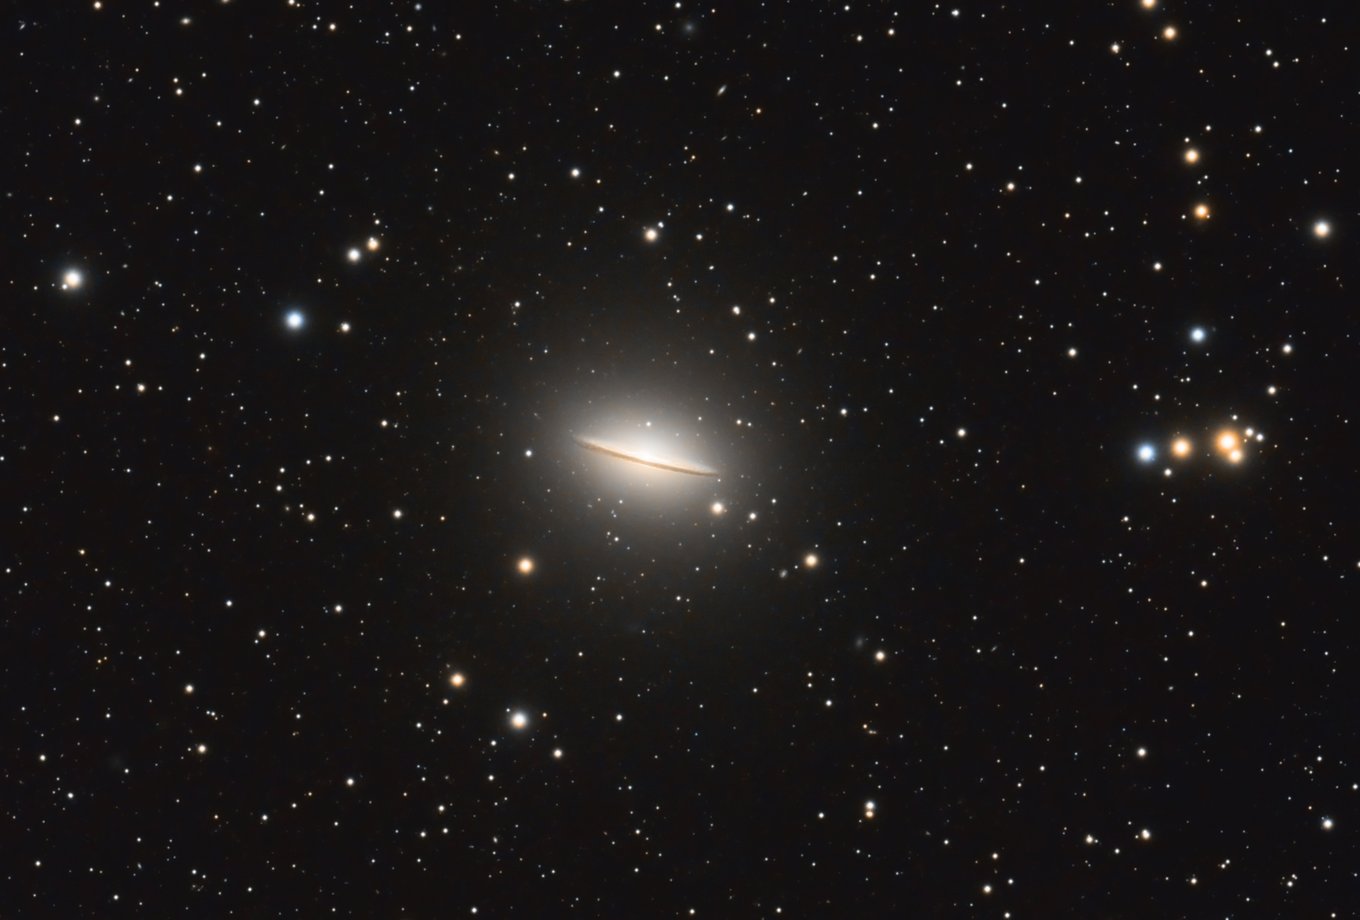 Messier 104, the Sombrero galaxy